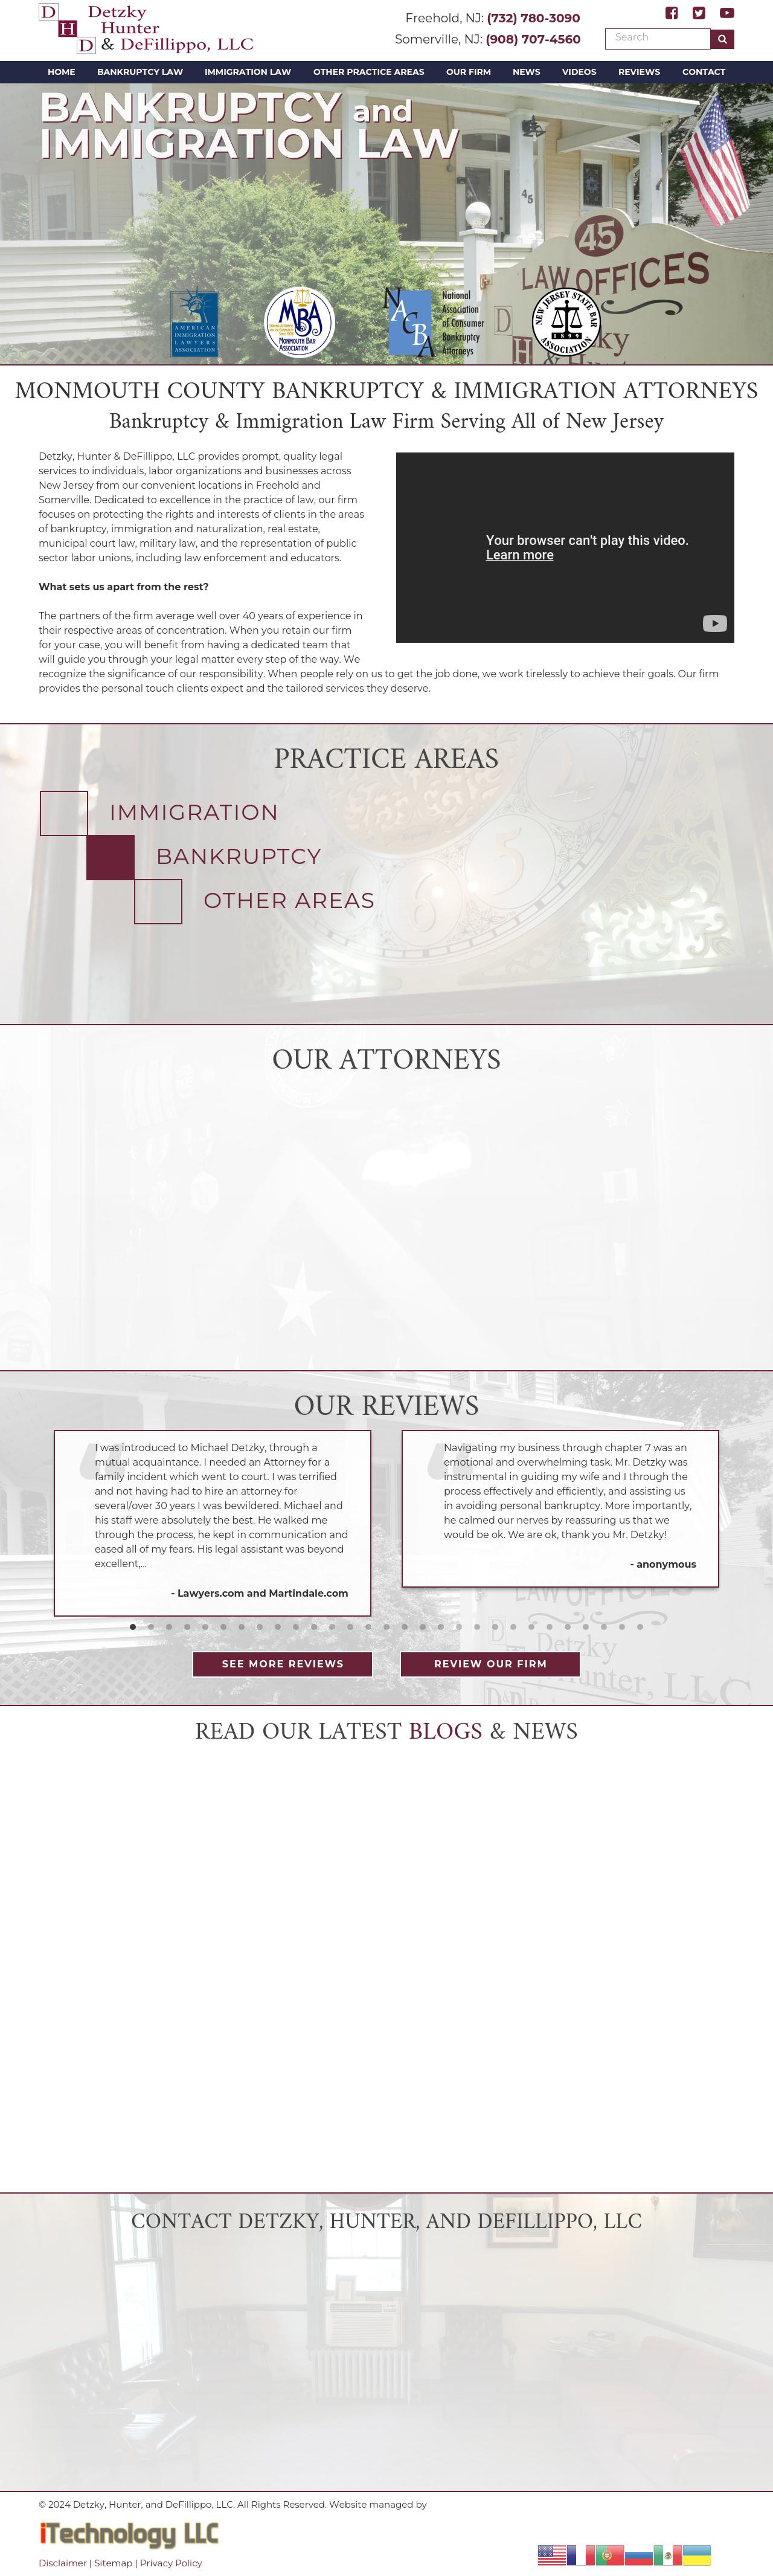 Detzky Hunter & Defillippo, LLC - Freehold NJ Lawyers